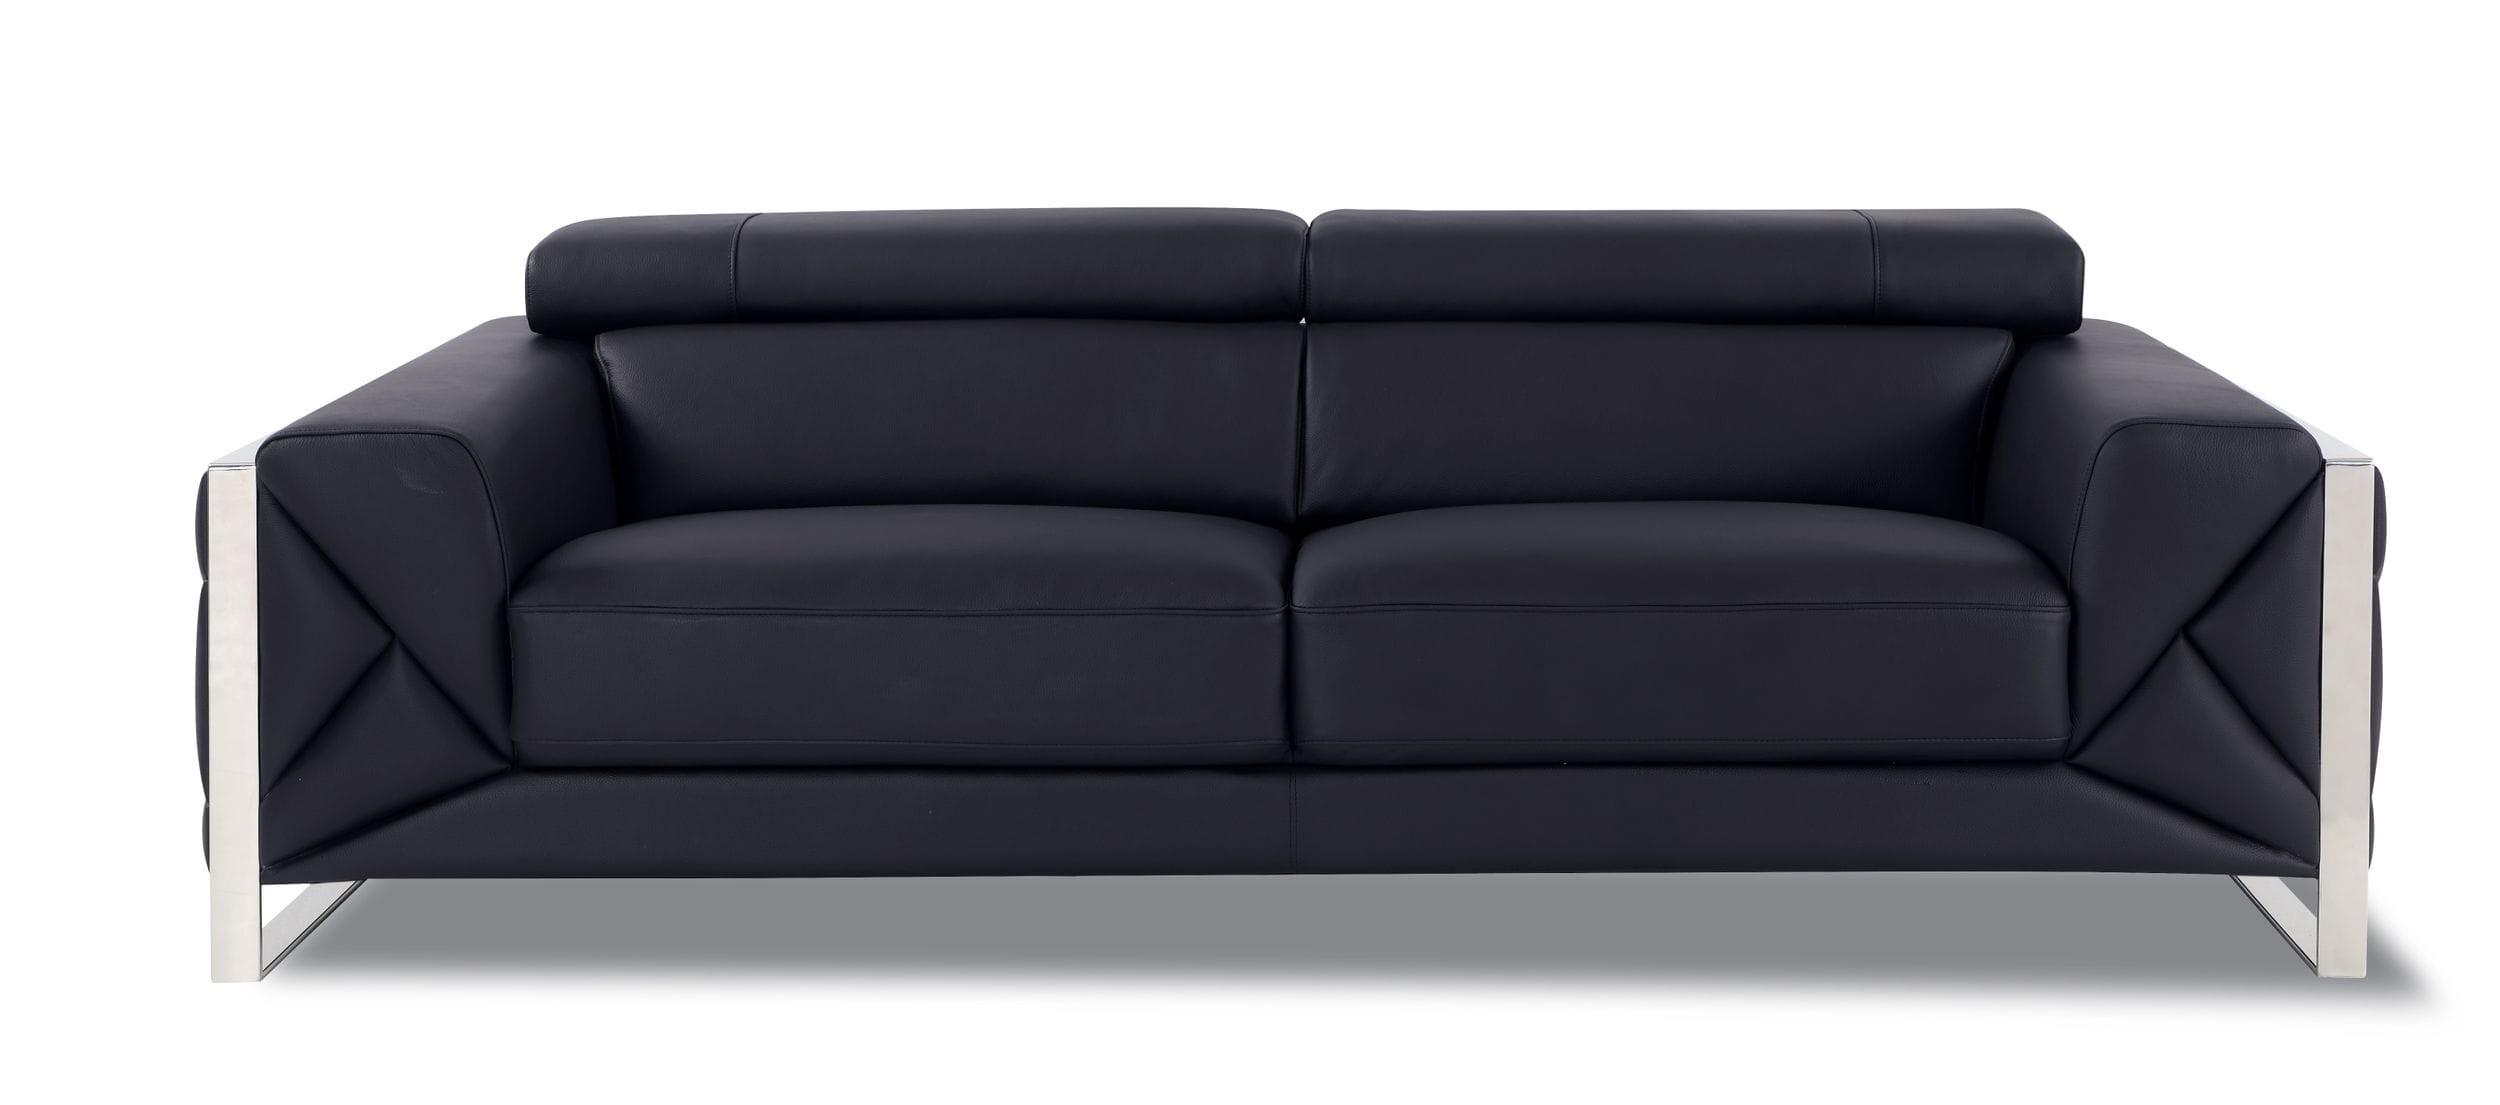 Contemporary Sofa 903-BLACK 903-BLACK-S in Black Genuine Italian Leatder